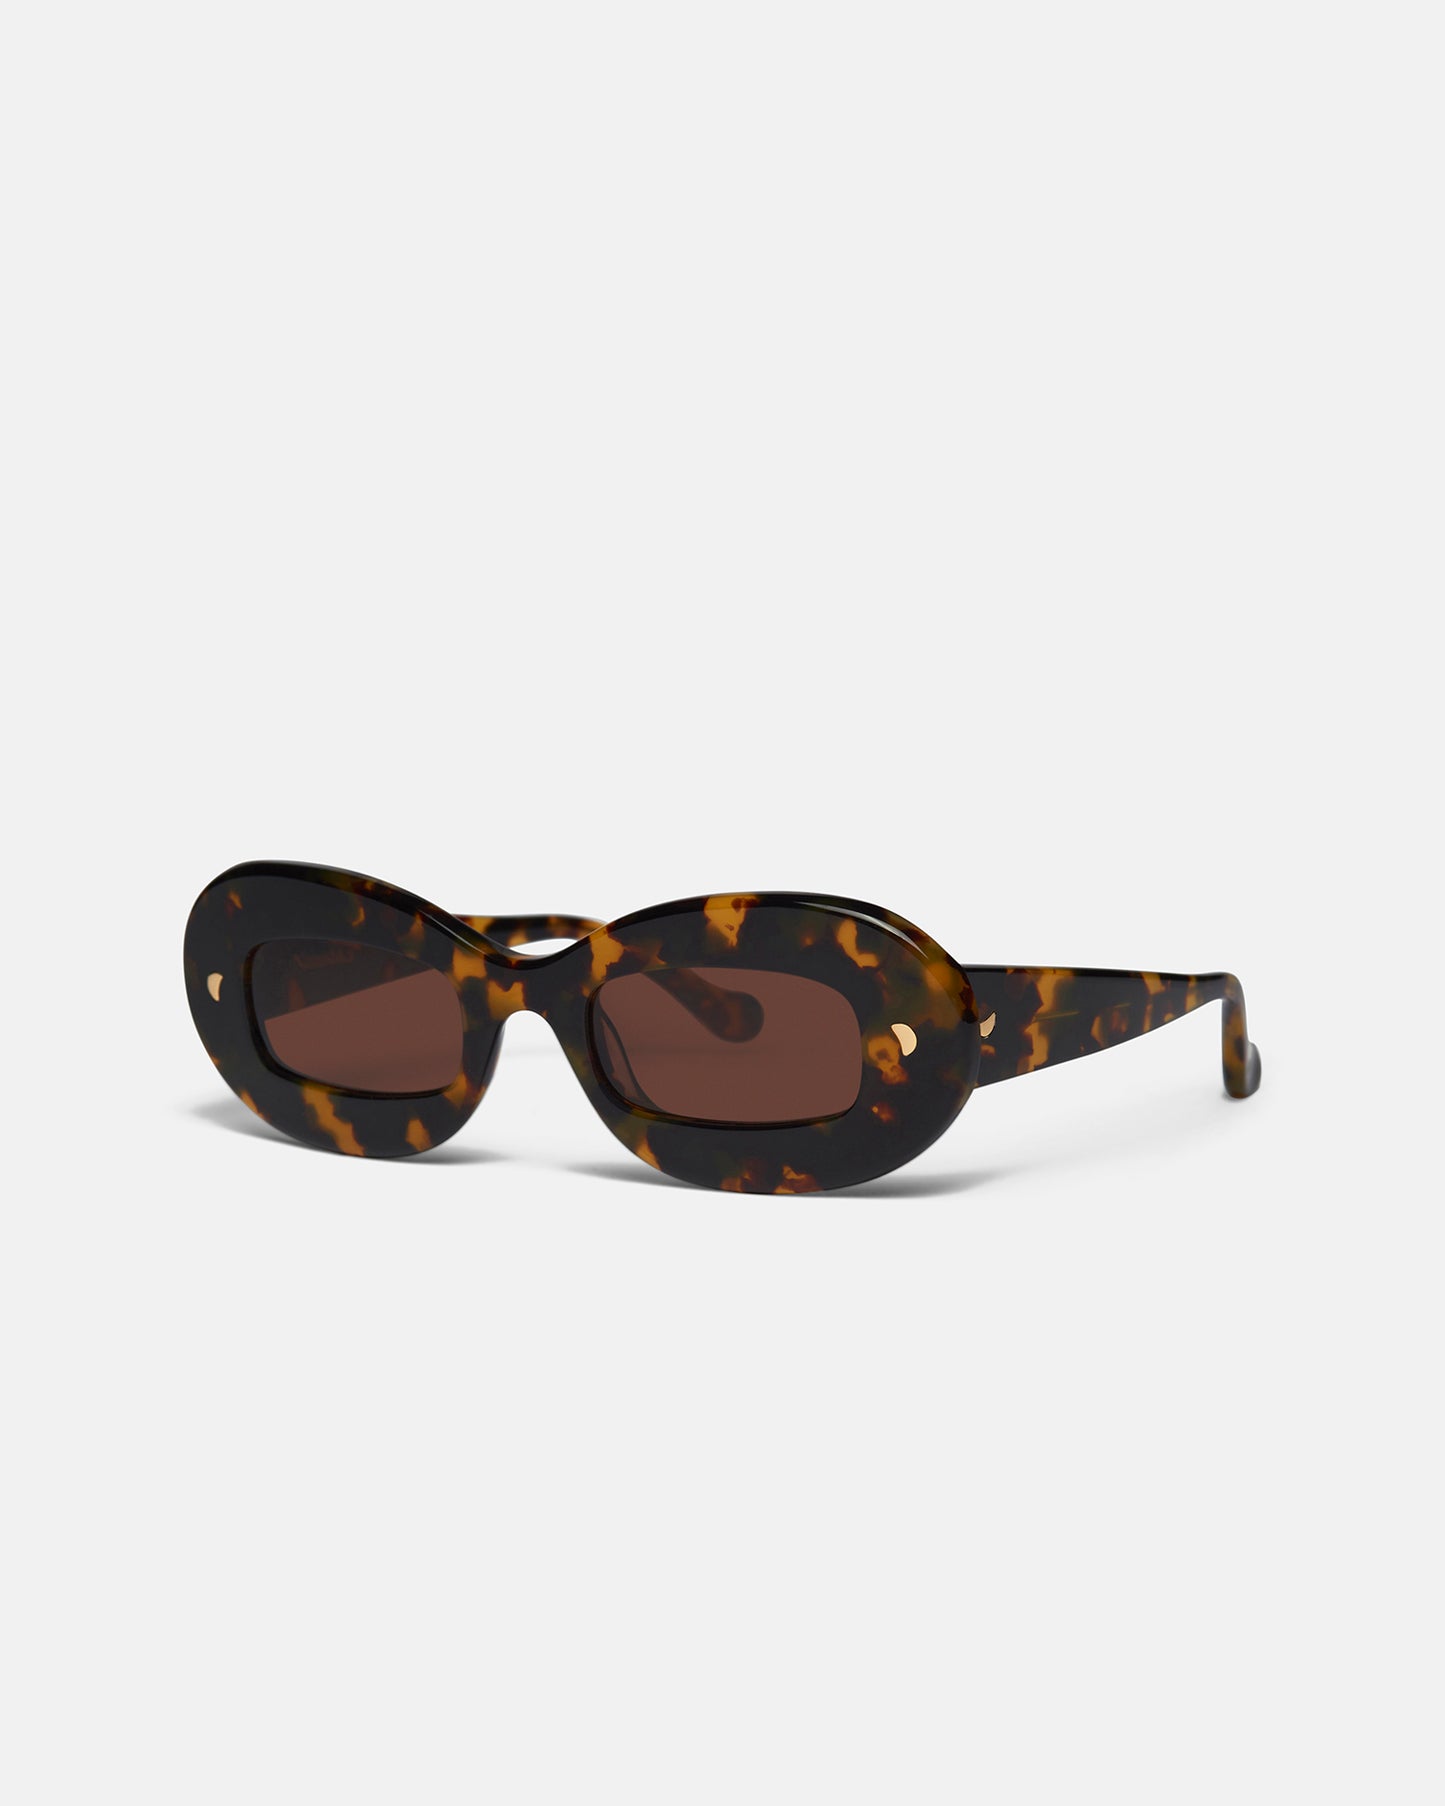 Gimma - Oval-Frame Sunglasses - Tortoishell